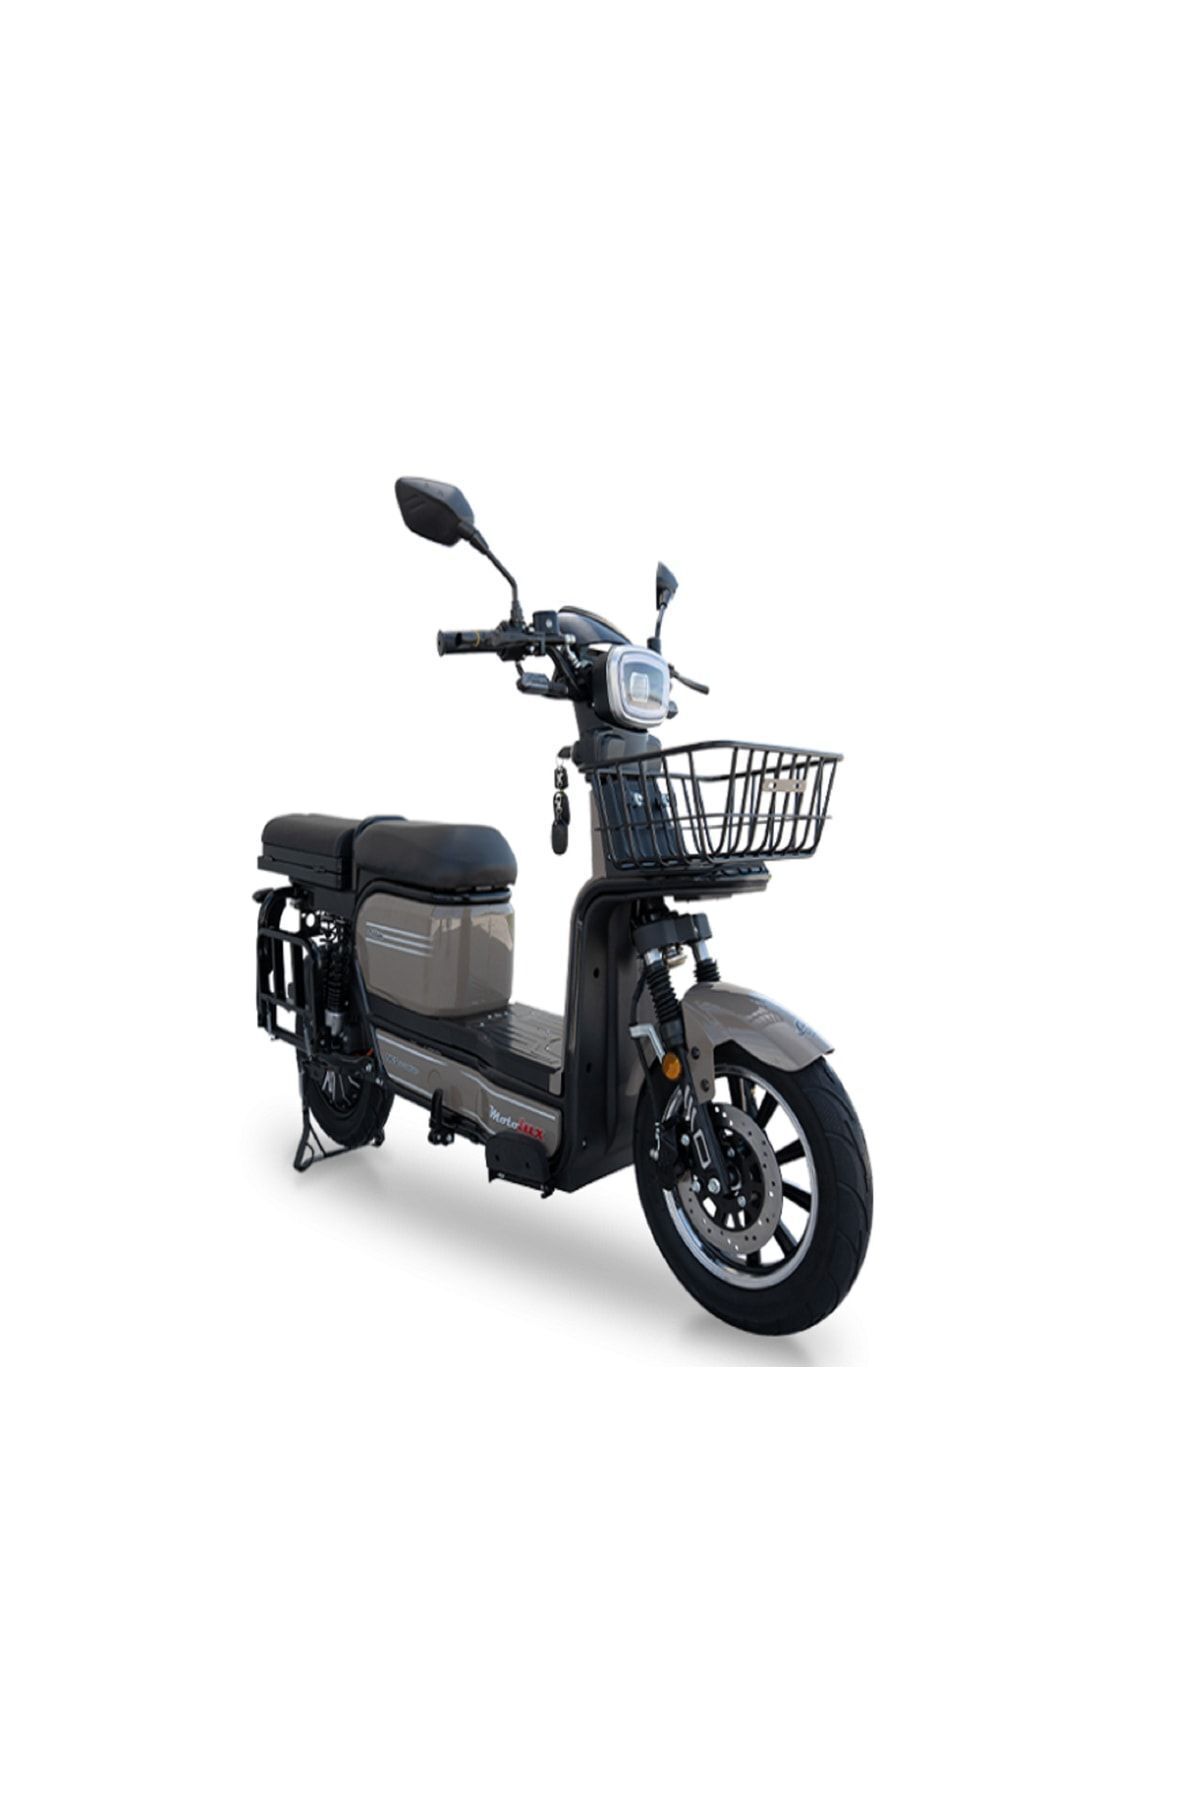 Motolux Piton Elektrikli Scooter Kahverengi (ANTİK BEJ)